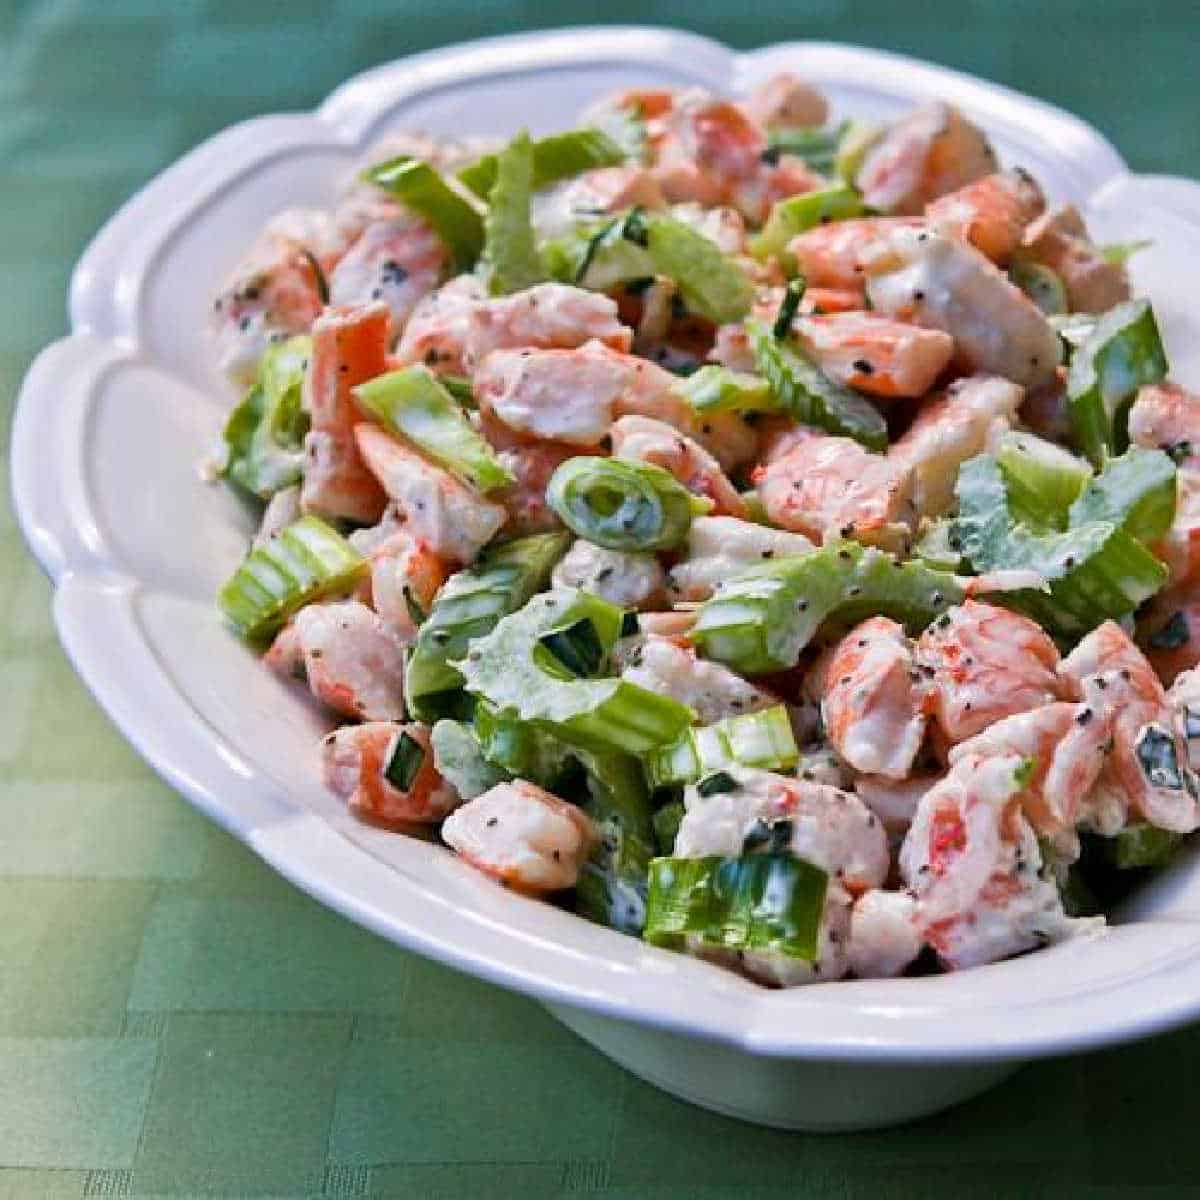 Tarragon Shrimp Salad shown in serving bowl on green napkin